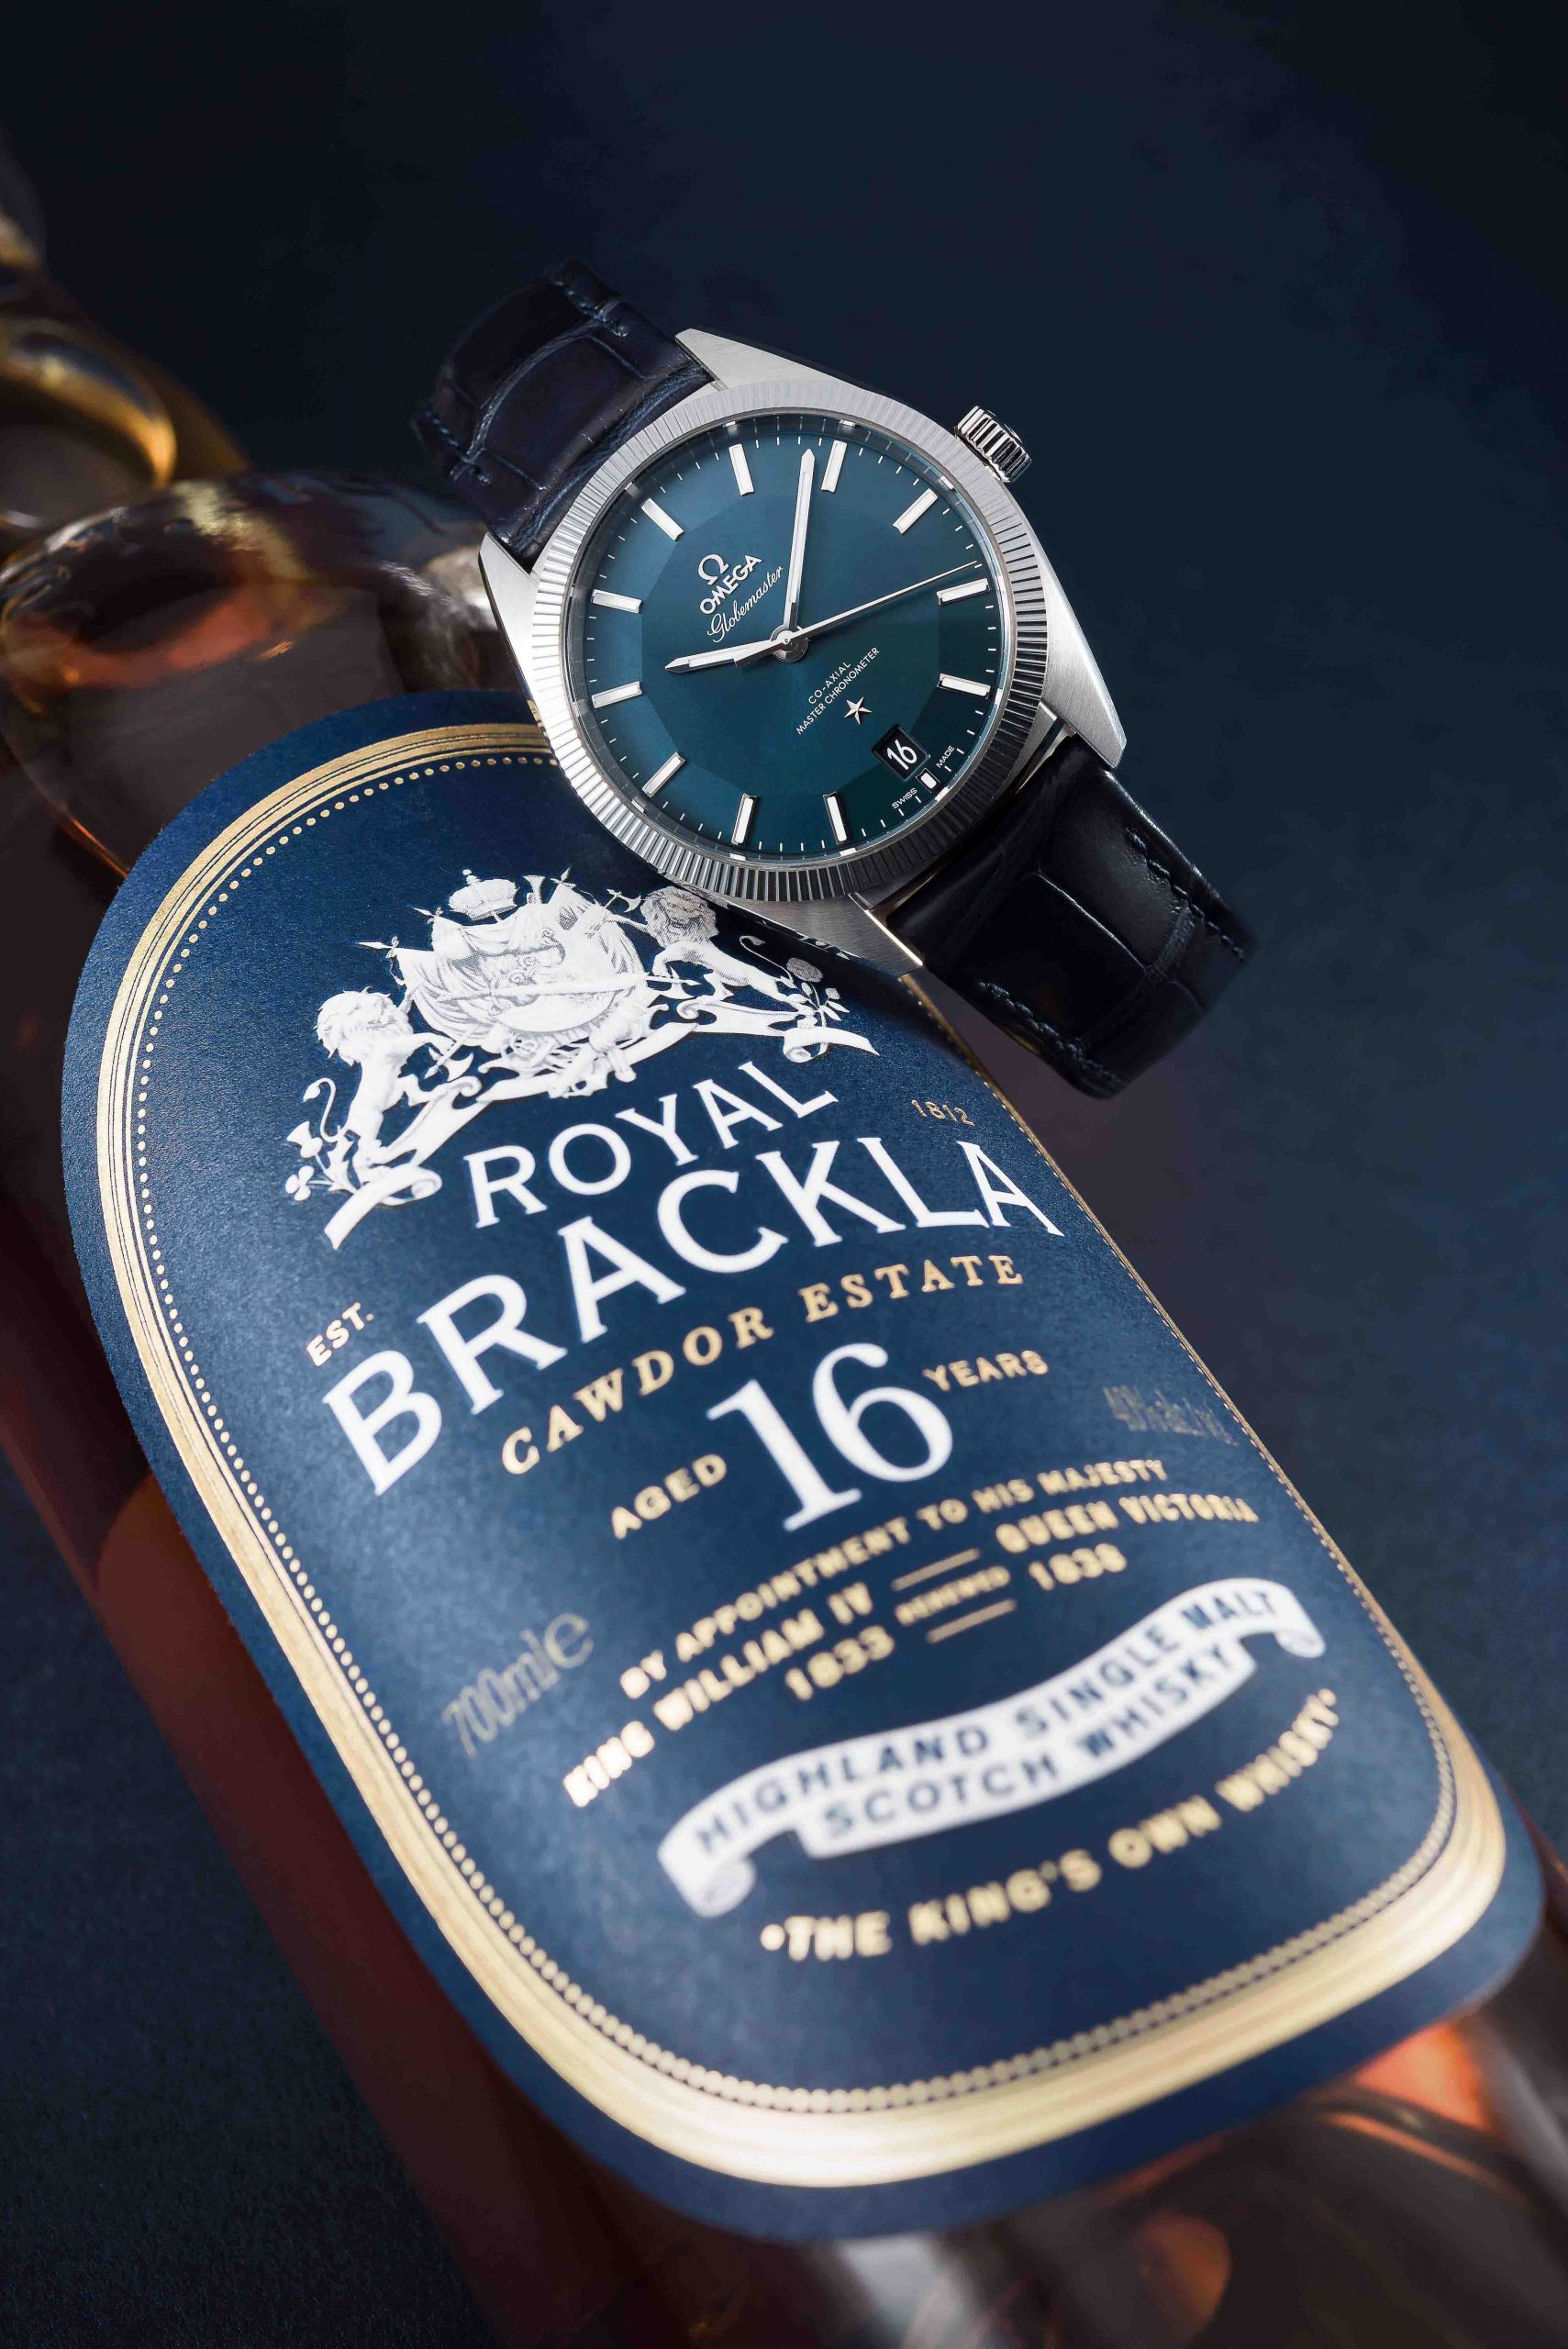 Watches & Whisky: Royal Brackla And The Omega Globemaster